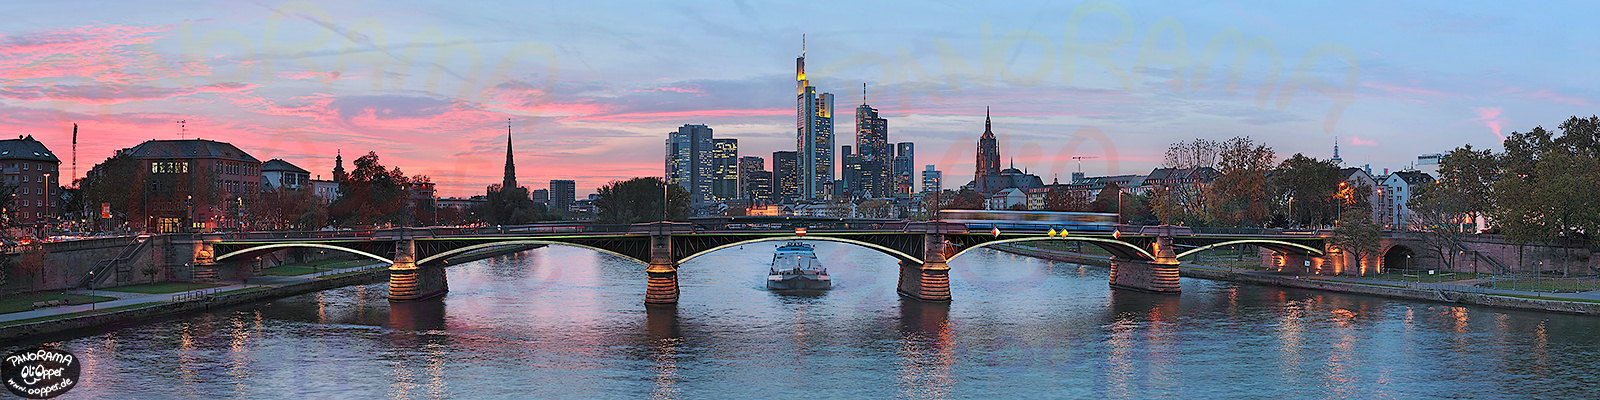 Frankfurt Skyline zum Sonnenuntergang - p141 - (c) by Oliver Opper